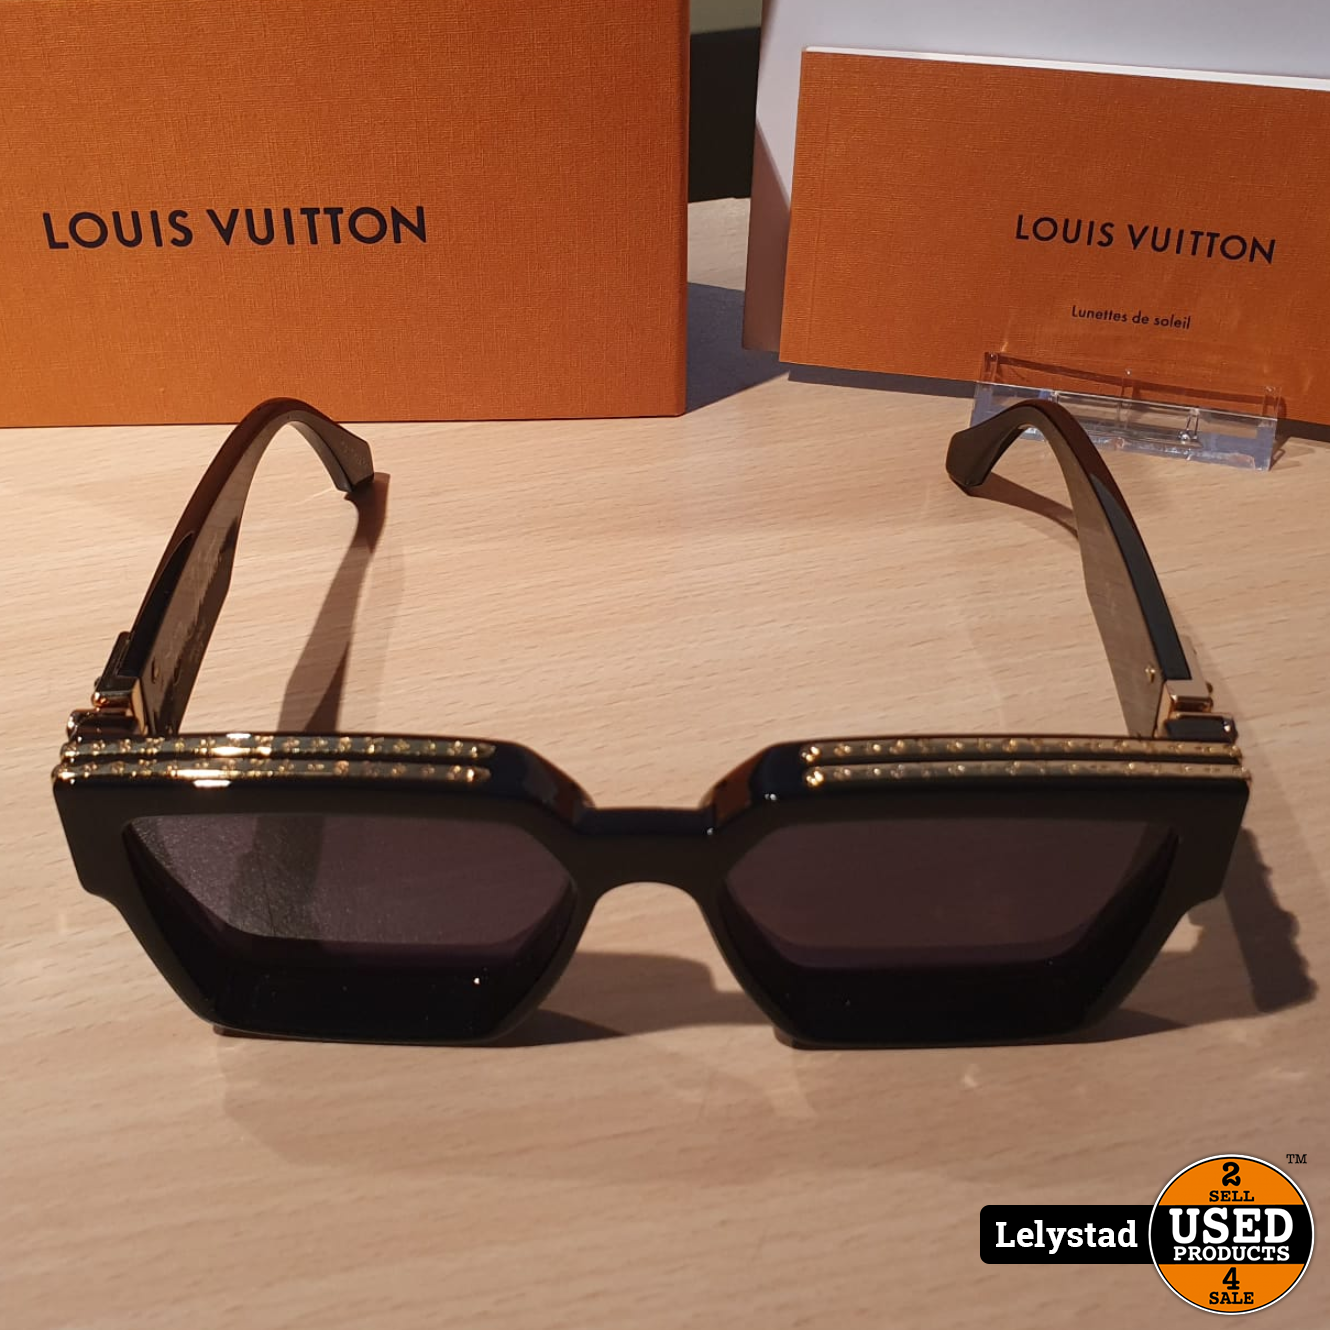 gereedschap Sinds Drijvende kracht Louis Vuitton 1.1 Millionaires Sunglasses One Size Black Z1165W 93L |  Absolute Nieuwstaat + Bon - Used Products Lelystad